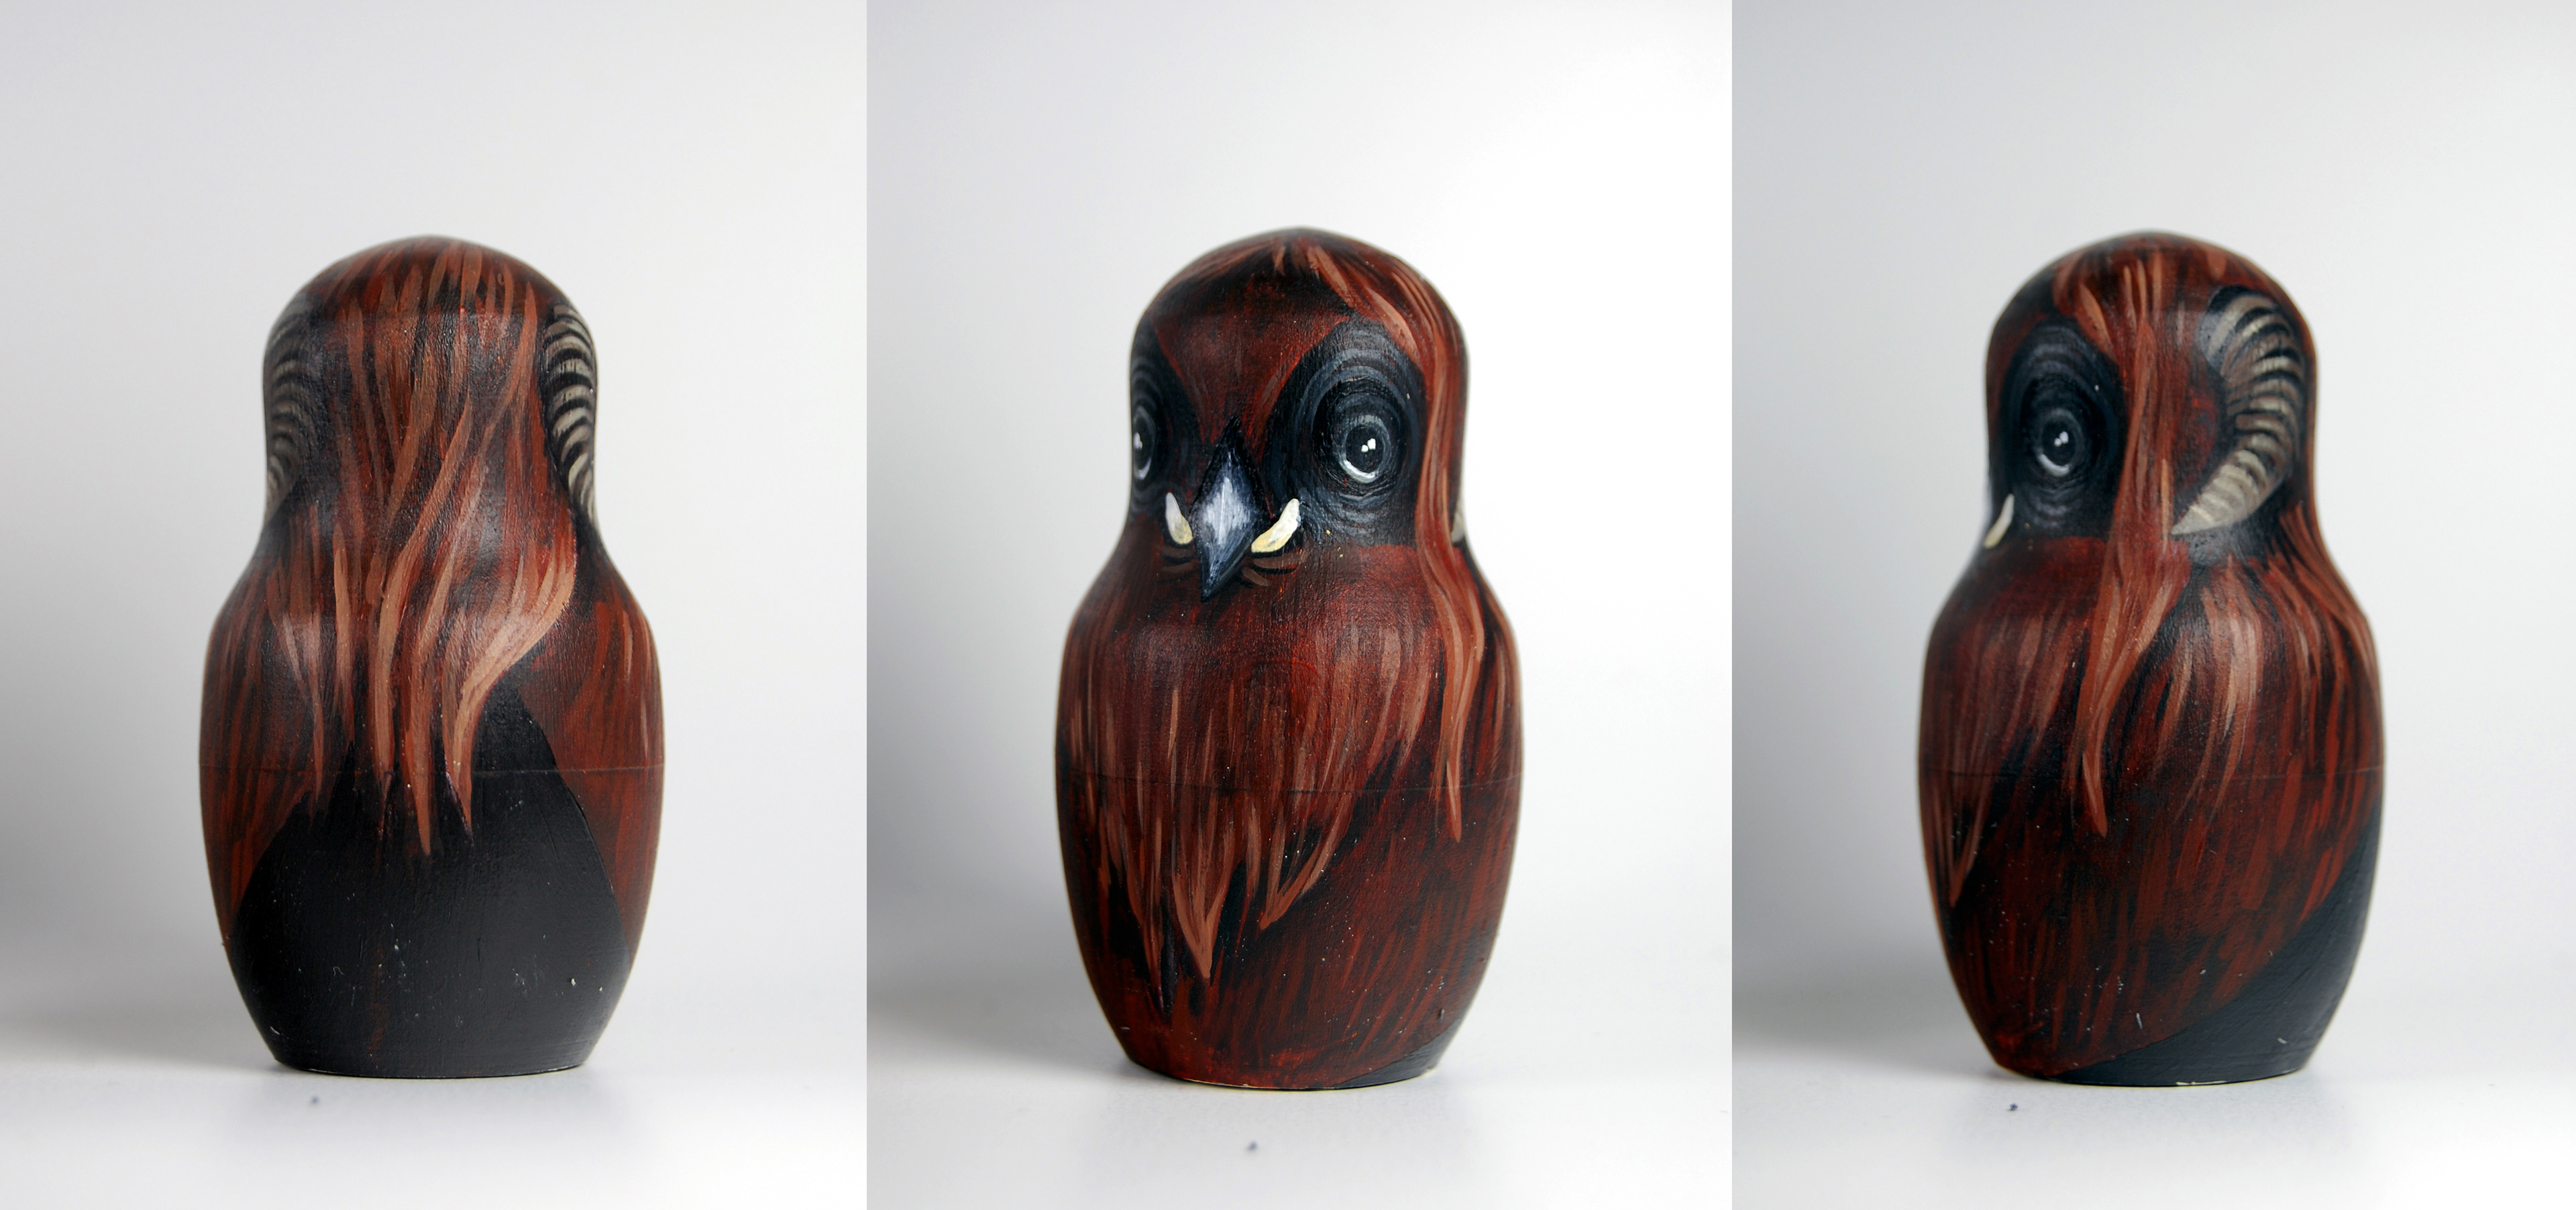 Caleigh Illerbrun / Artist / Illustrator Labyrinth Themed Russian Owls